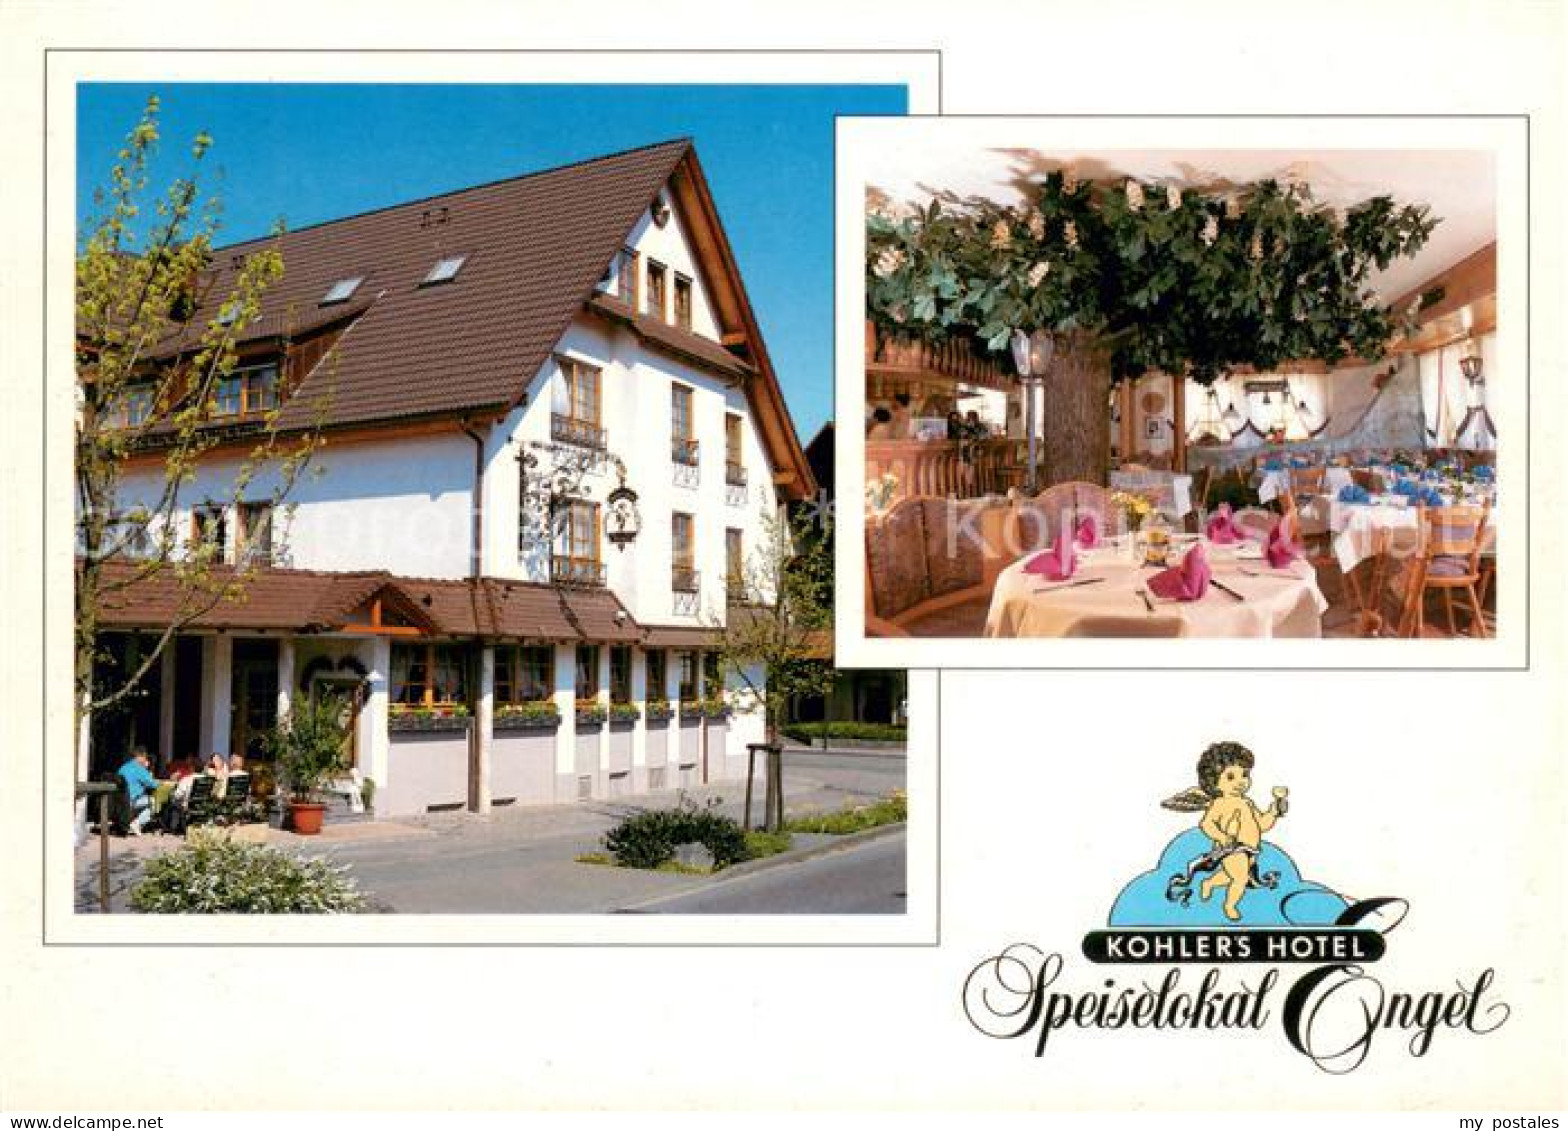 73644275 Vimbuch Speiselokal Engel Kohlers Hotel Vimbuch - Bühl